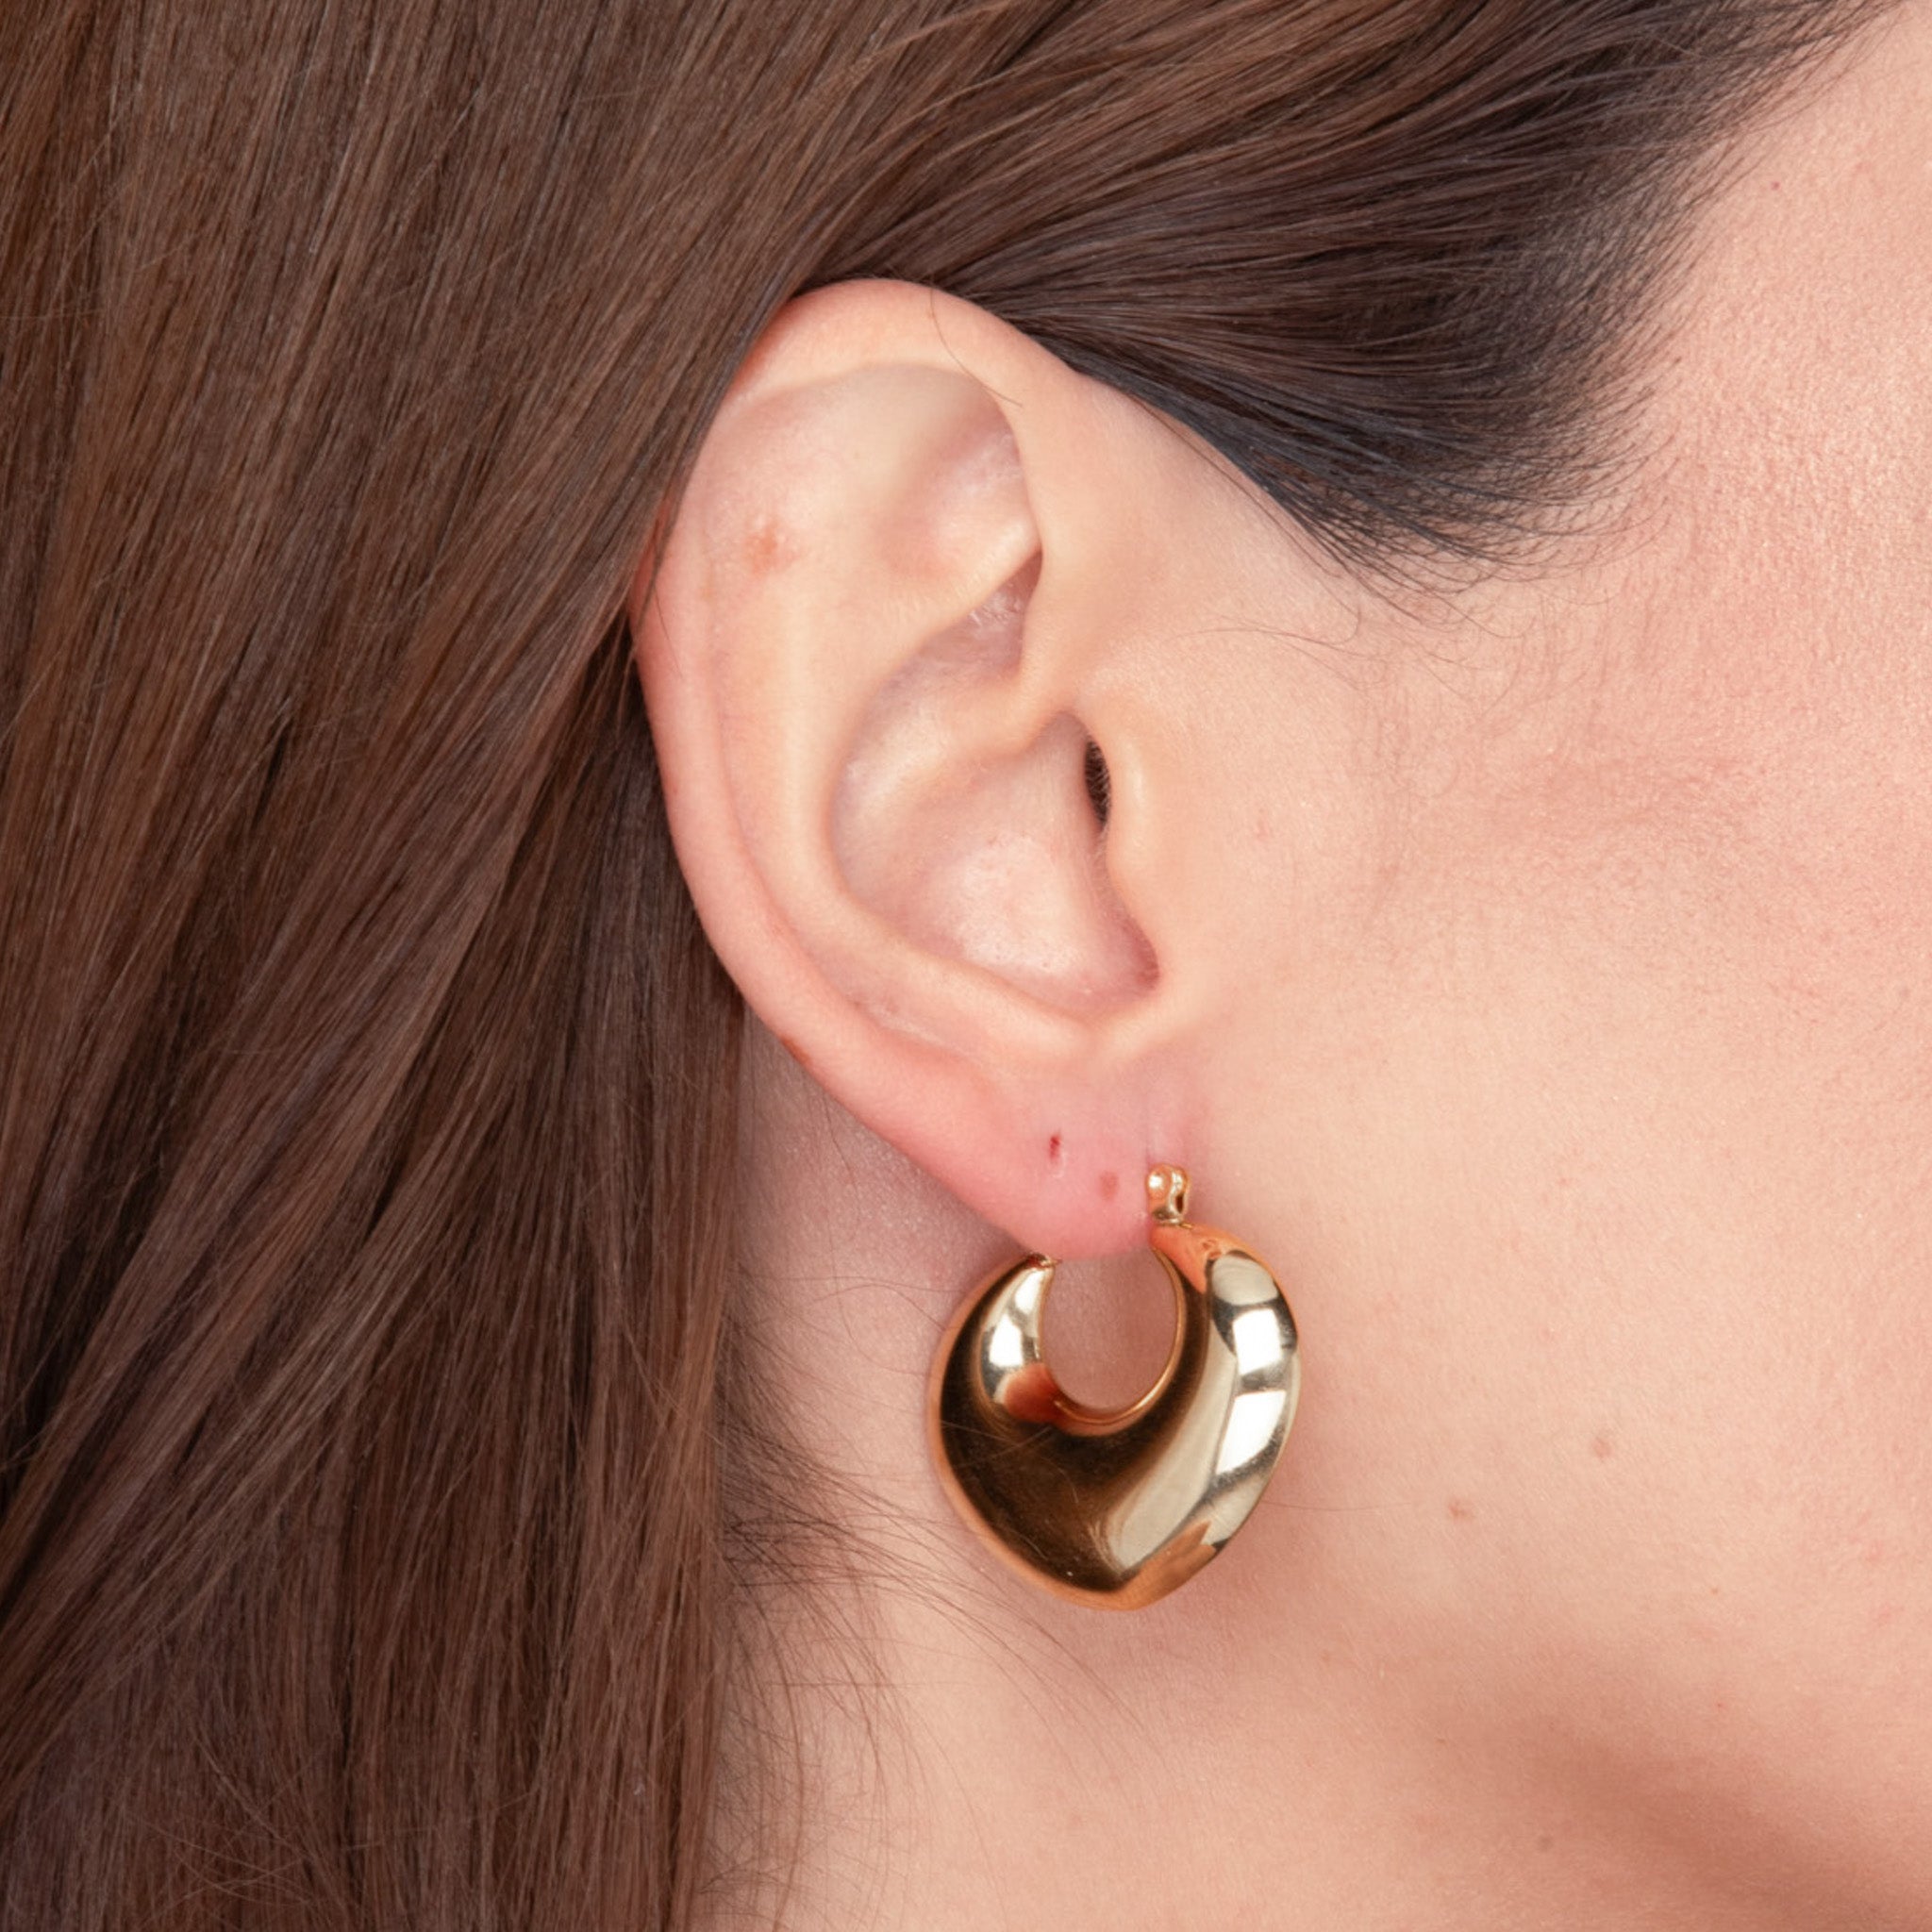 Marina Dome Hoop Earrings